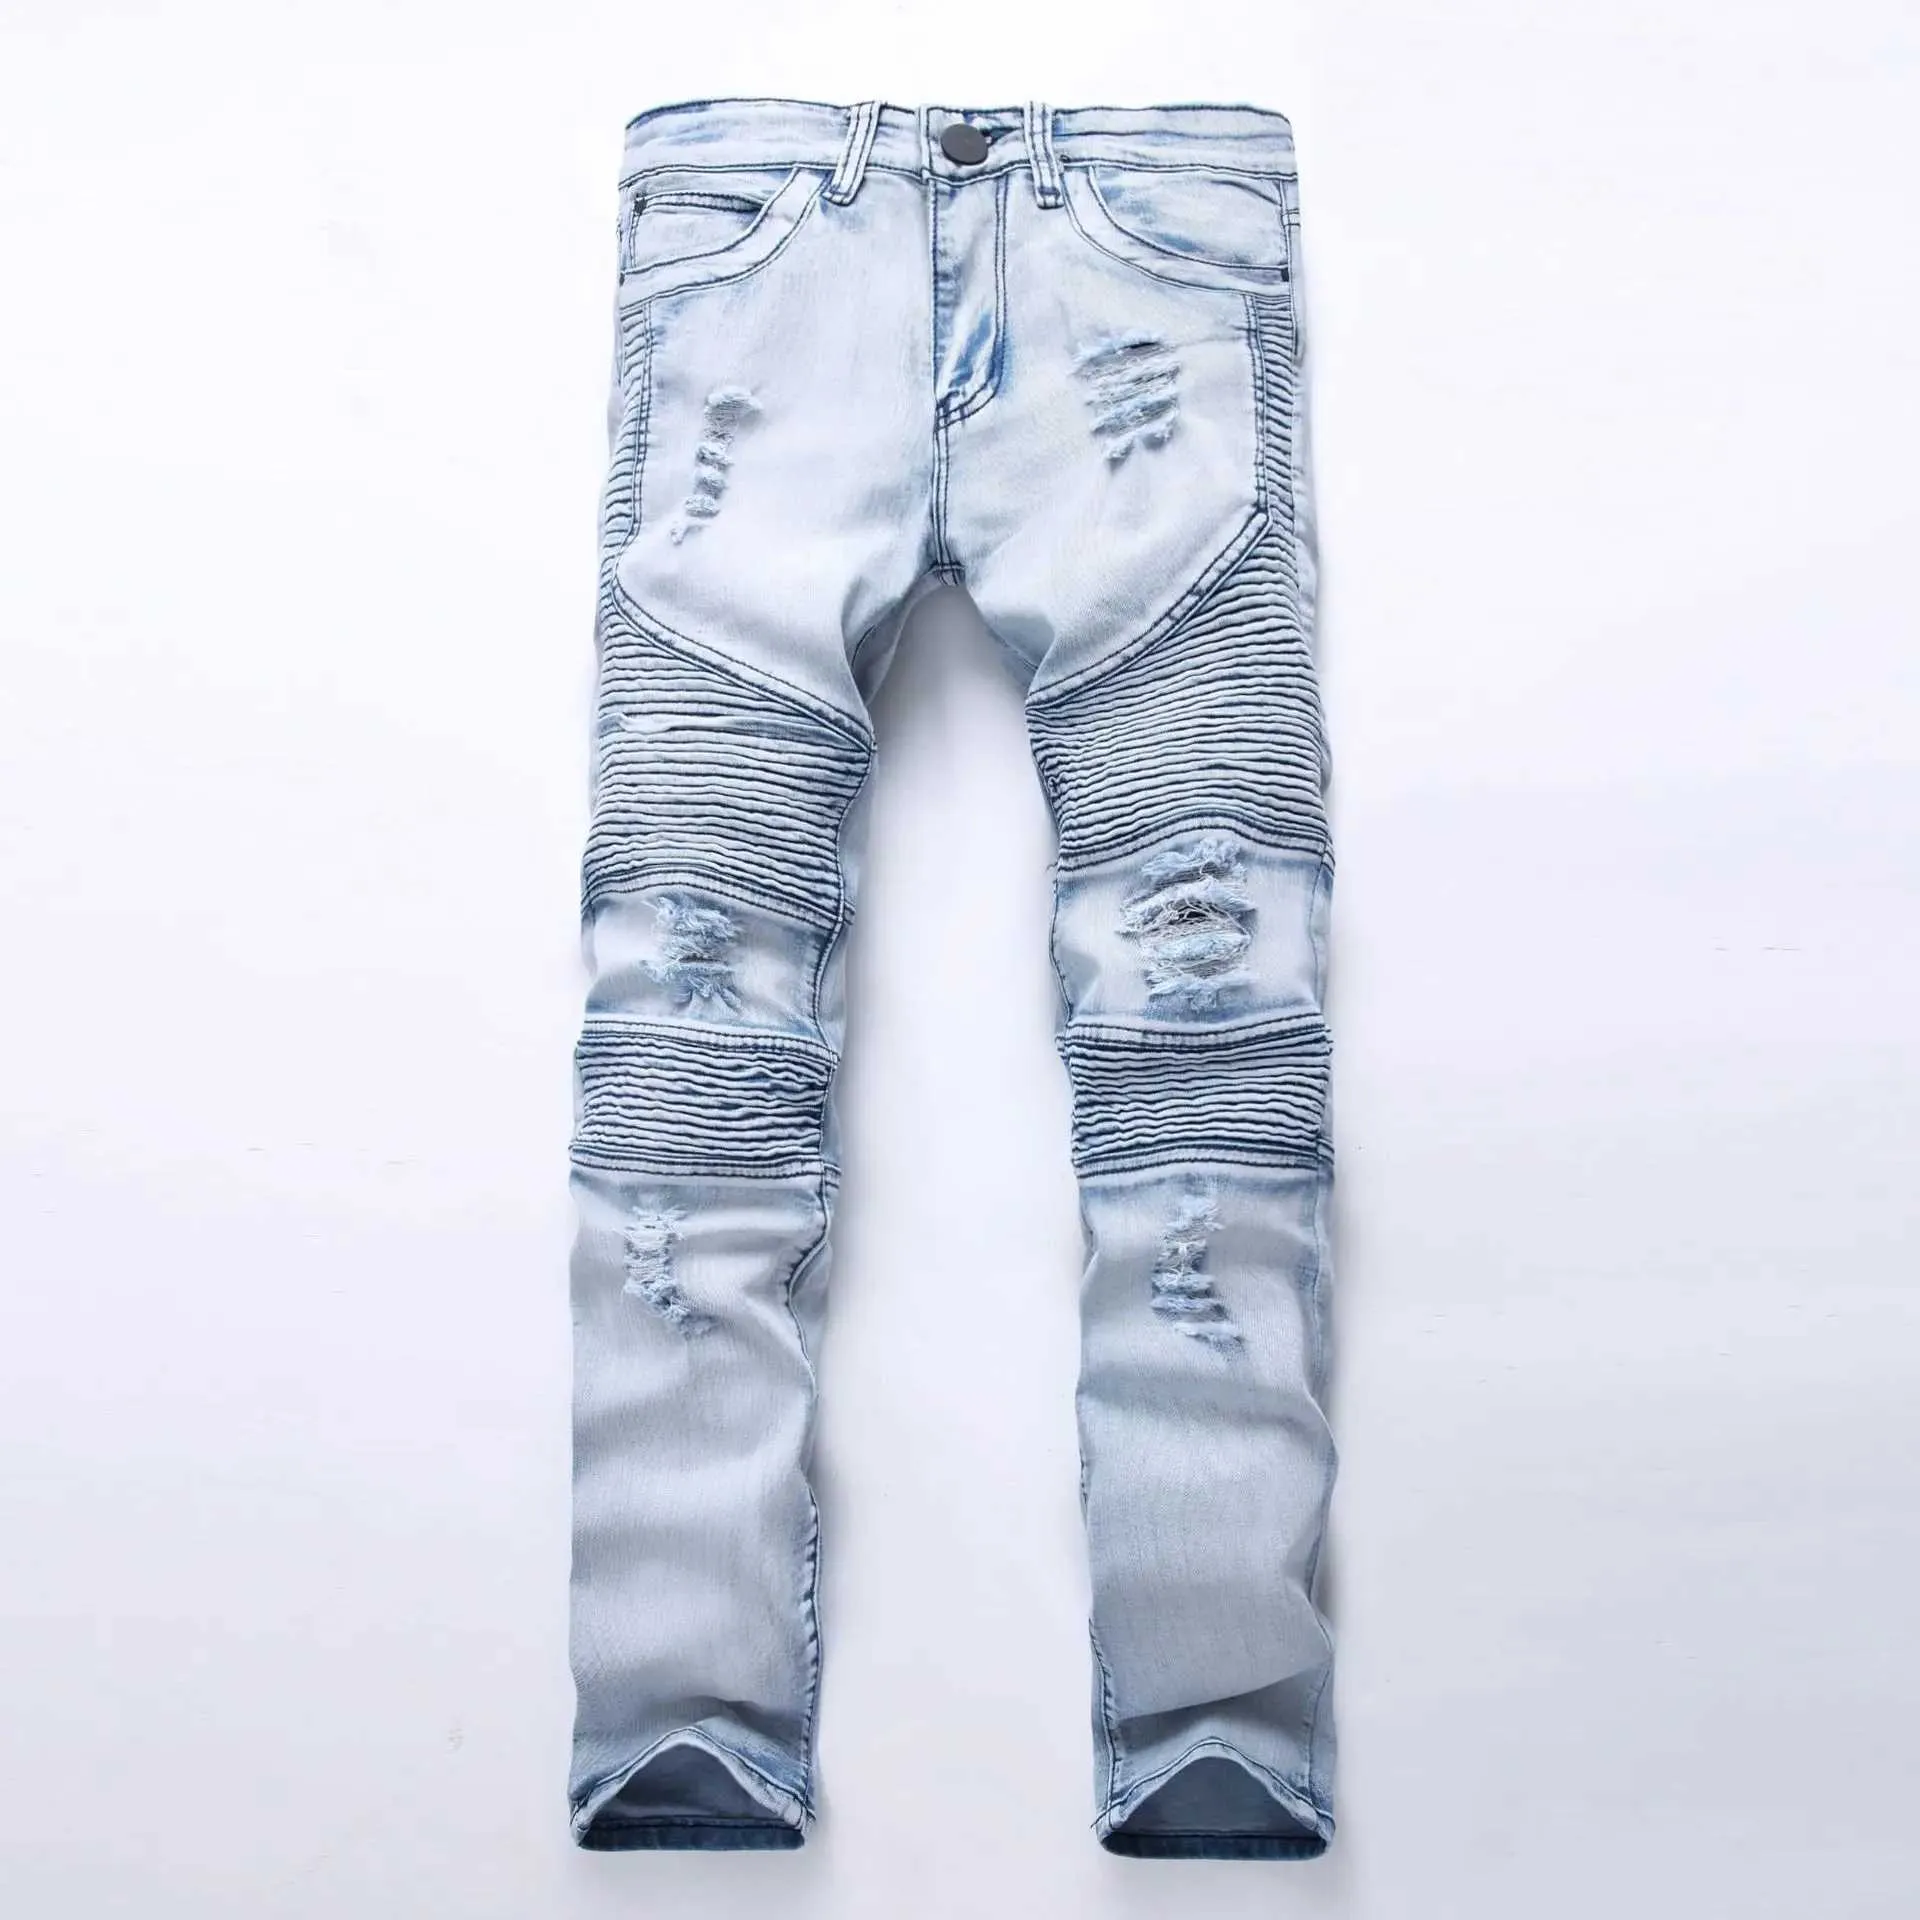 2019 Mens Jeans New Fashion Male Casual Biker Jeans Slim Straight Ft Jeans Loose Waist Long Trousers Denim Pants Large Size 42